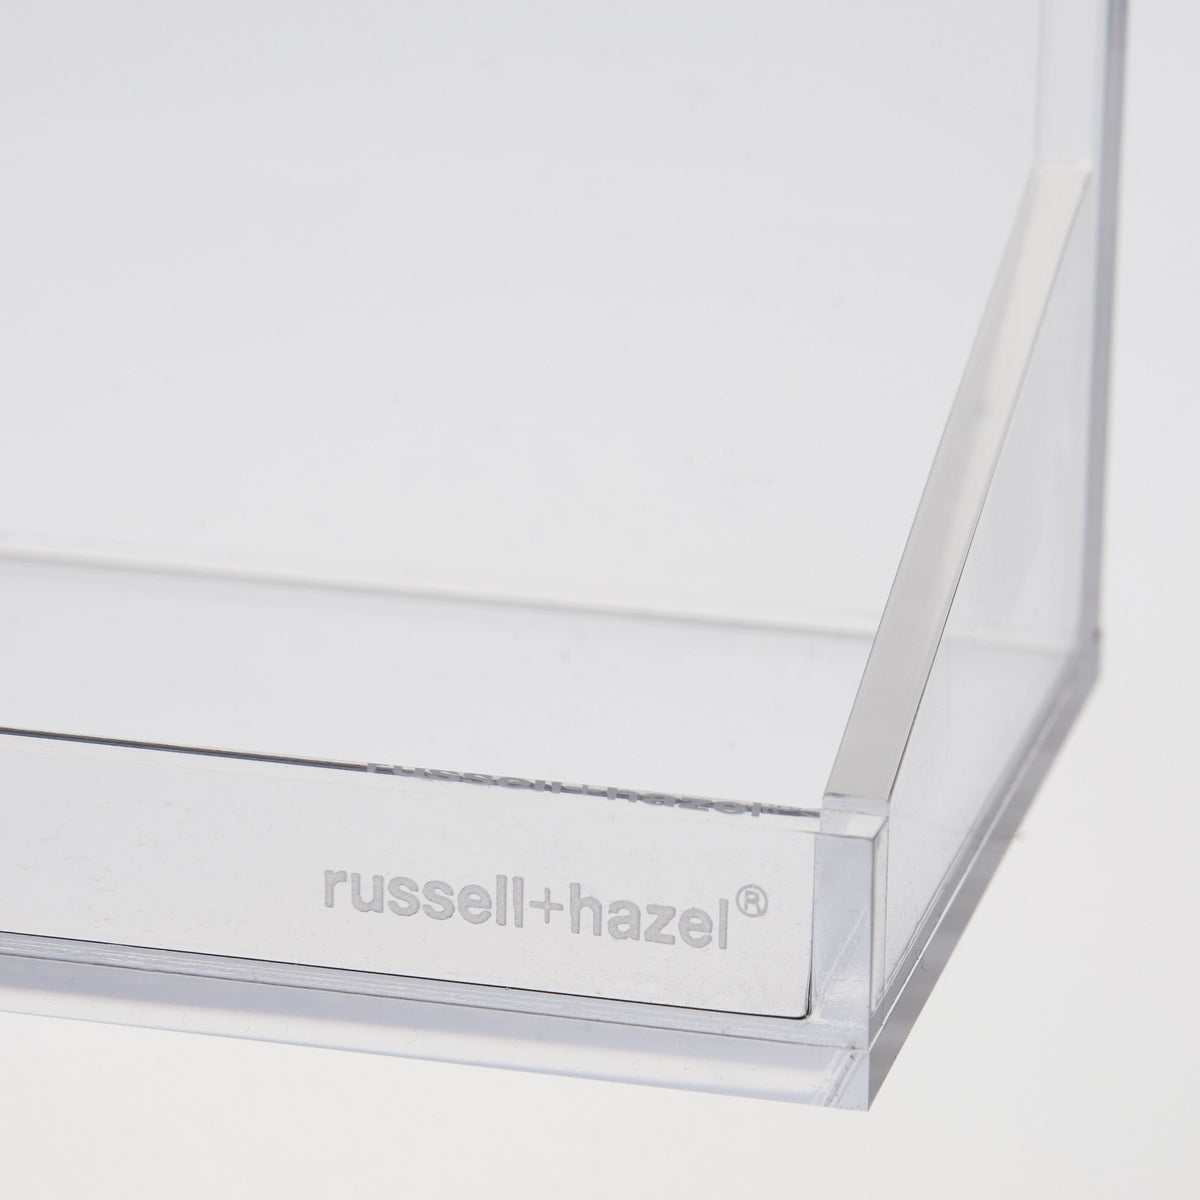 Acrylic Wall Shelf russell+hazel Acrylic Organization